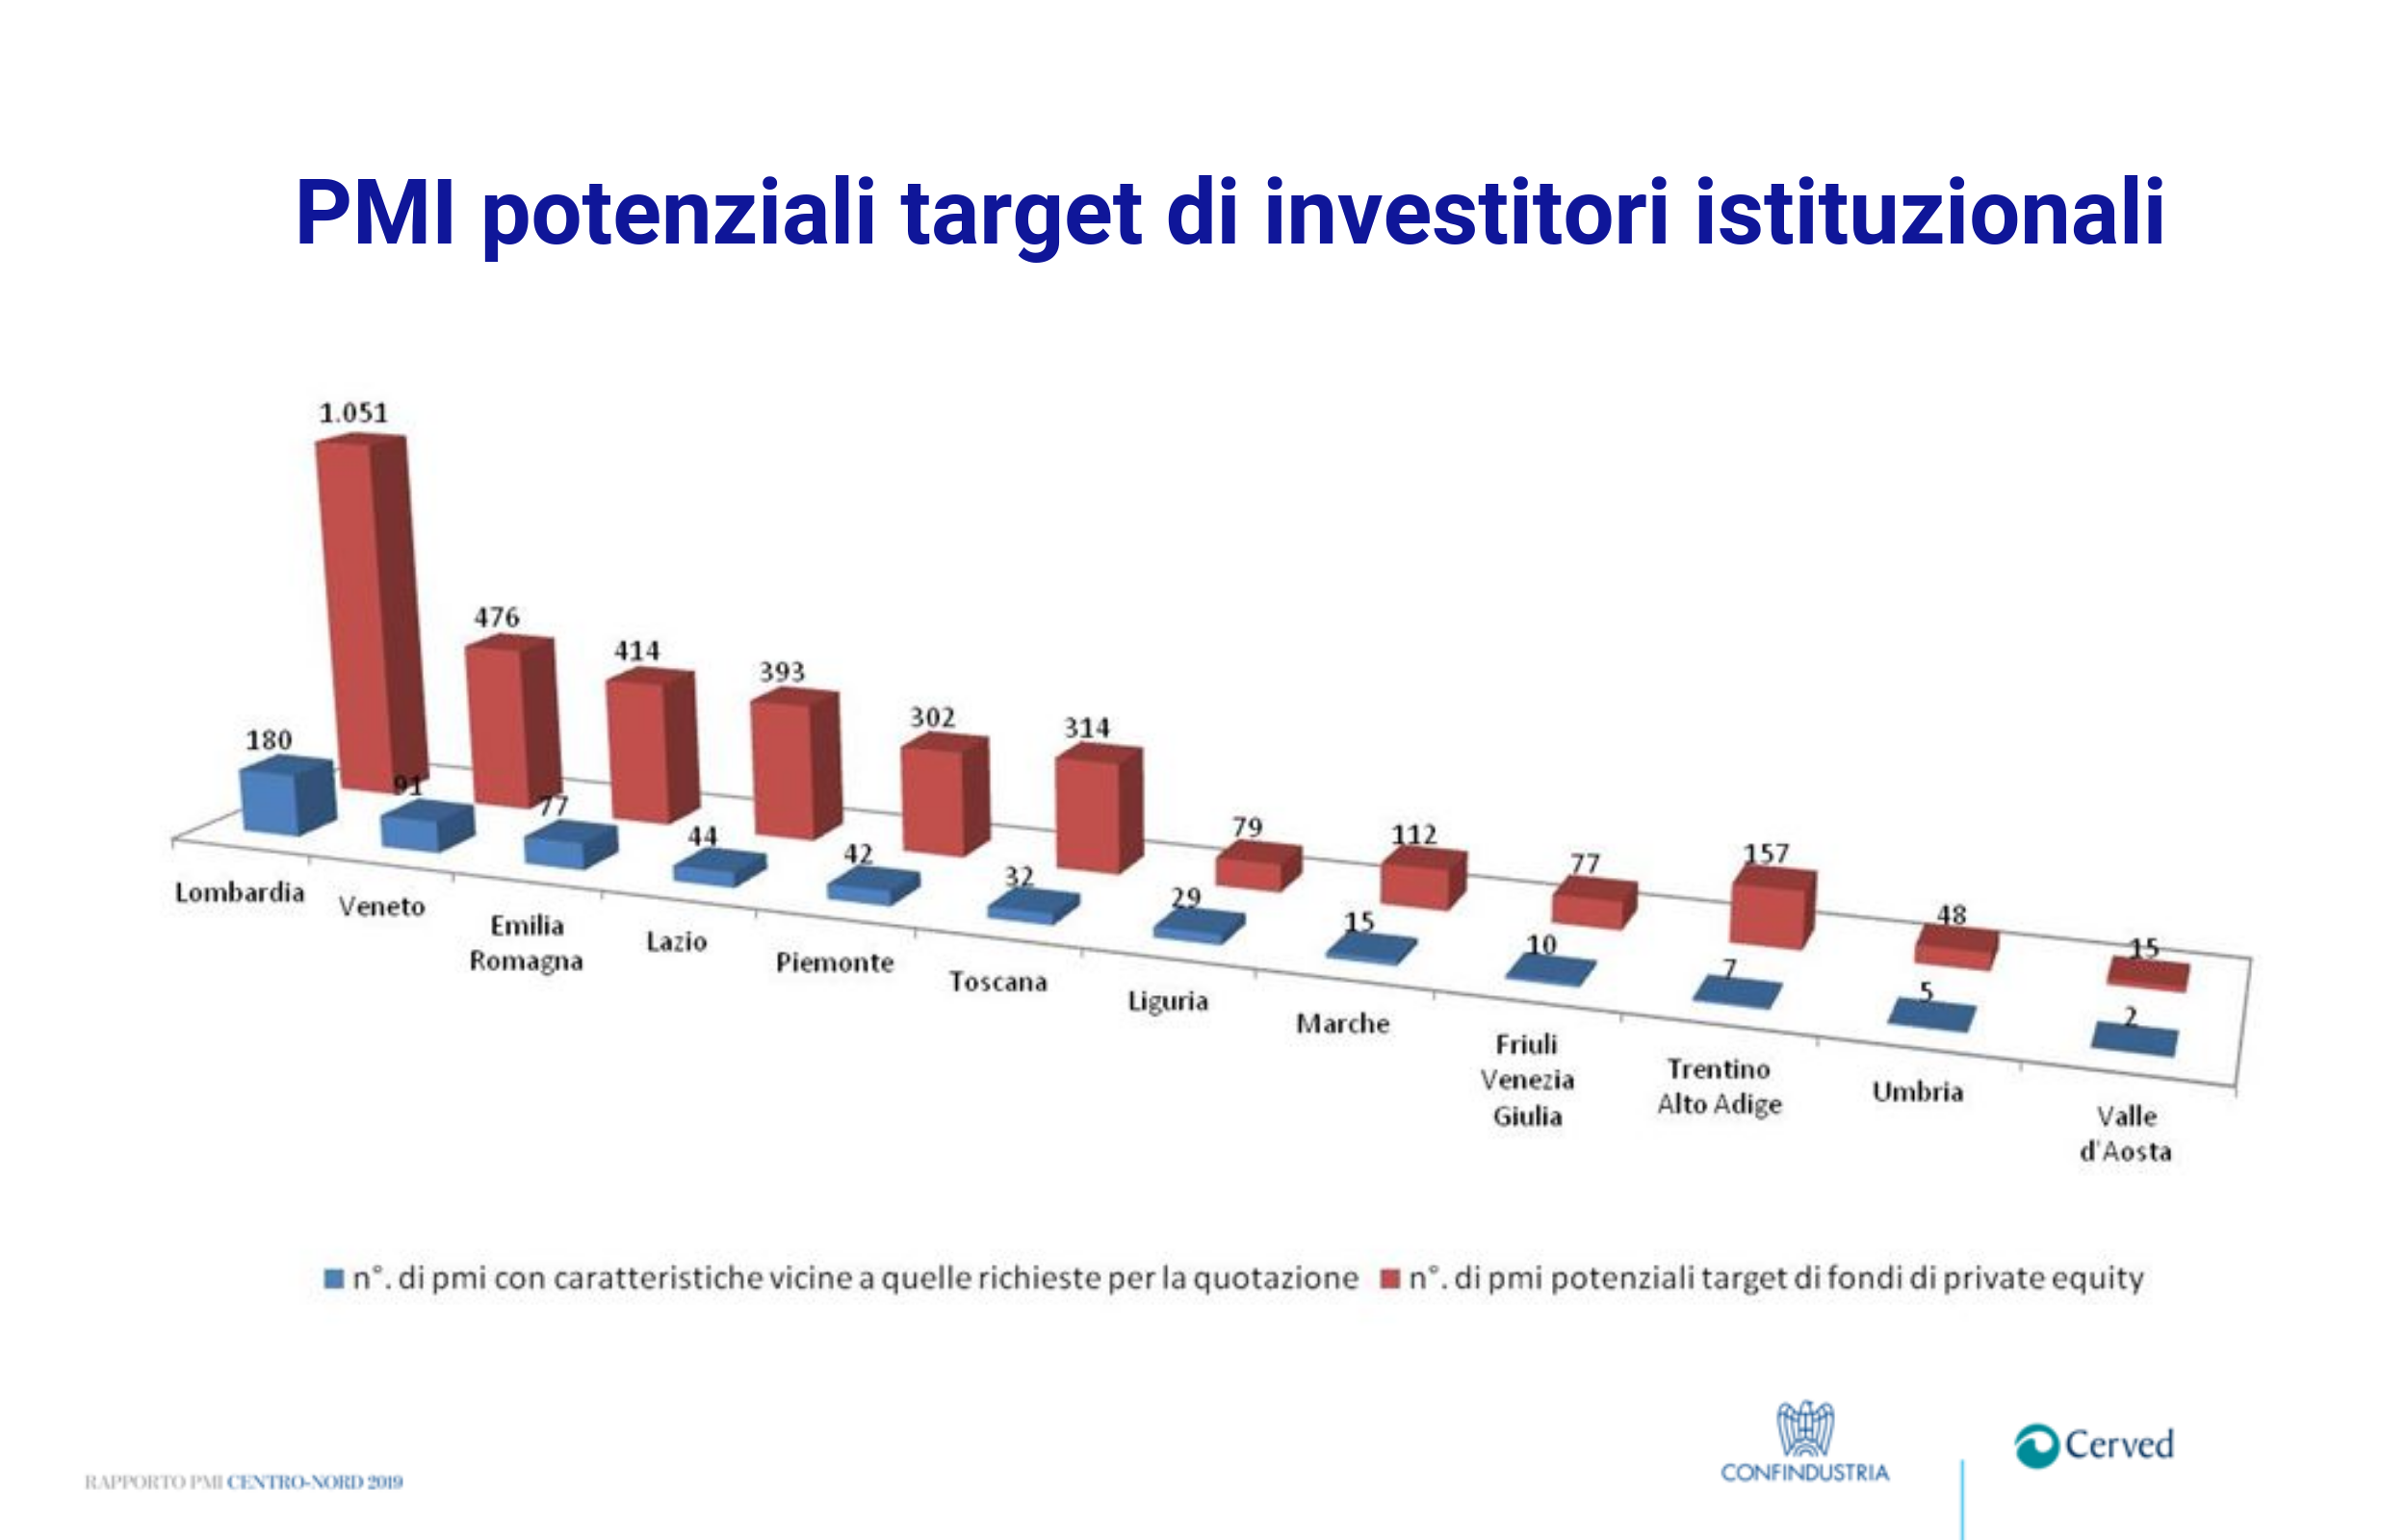 PMI potenziali target di investitori istituzionali